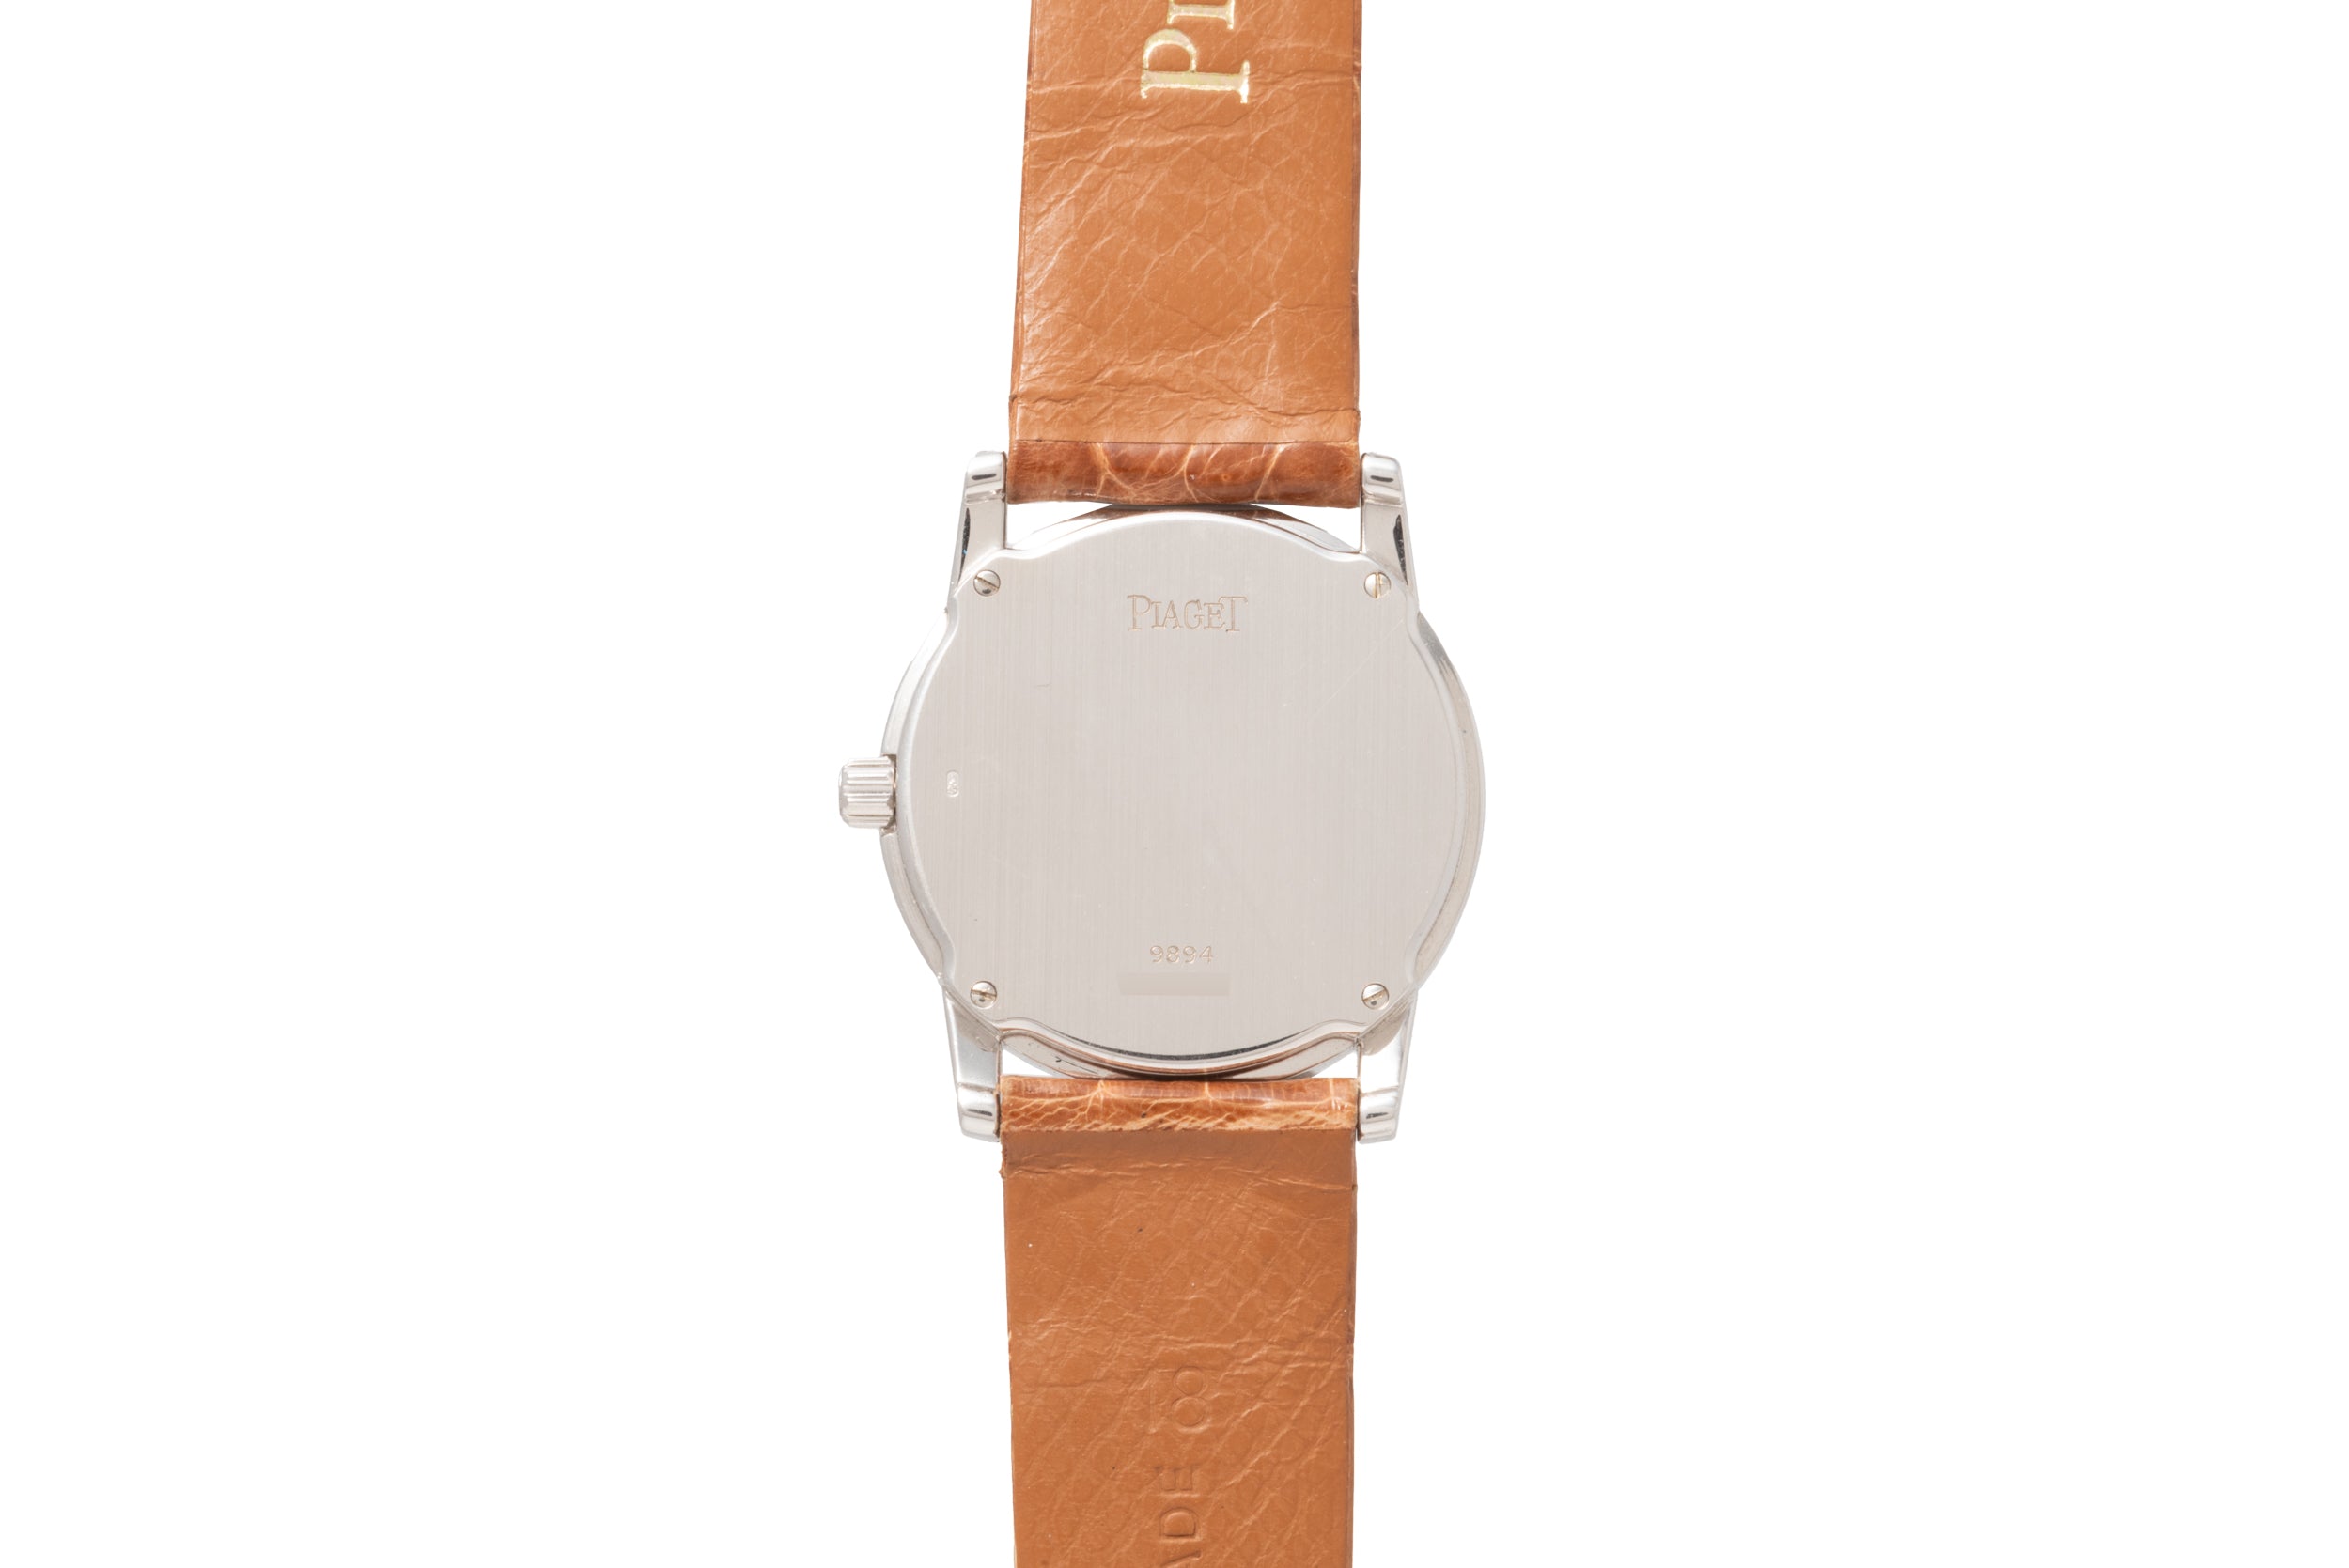 Buy Piaget Altiplano Watch [G0A39110] Online - Best Price Piaget Altiplano  Watch [G0A39110] - Justdial Shop Online.